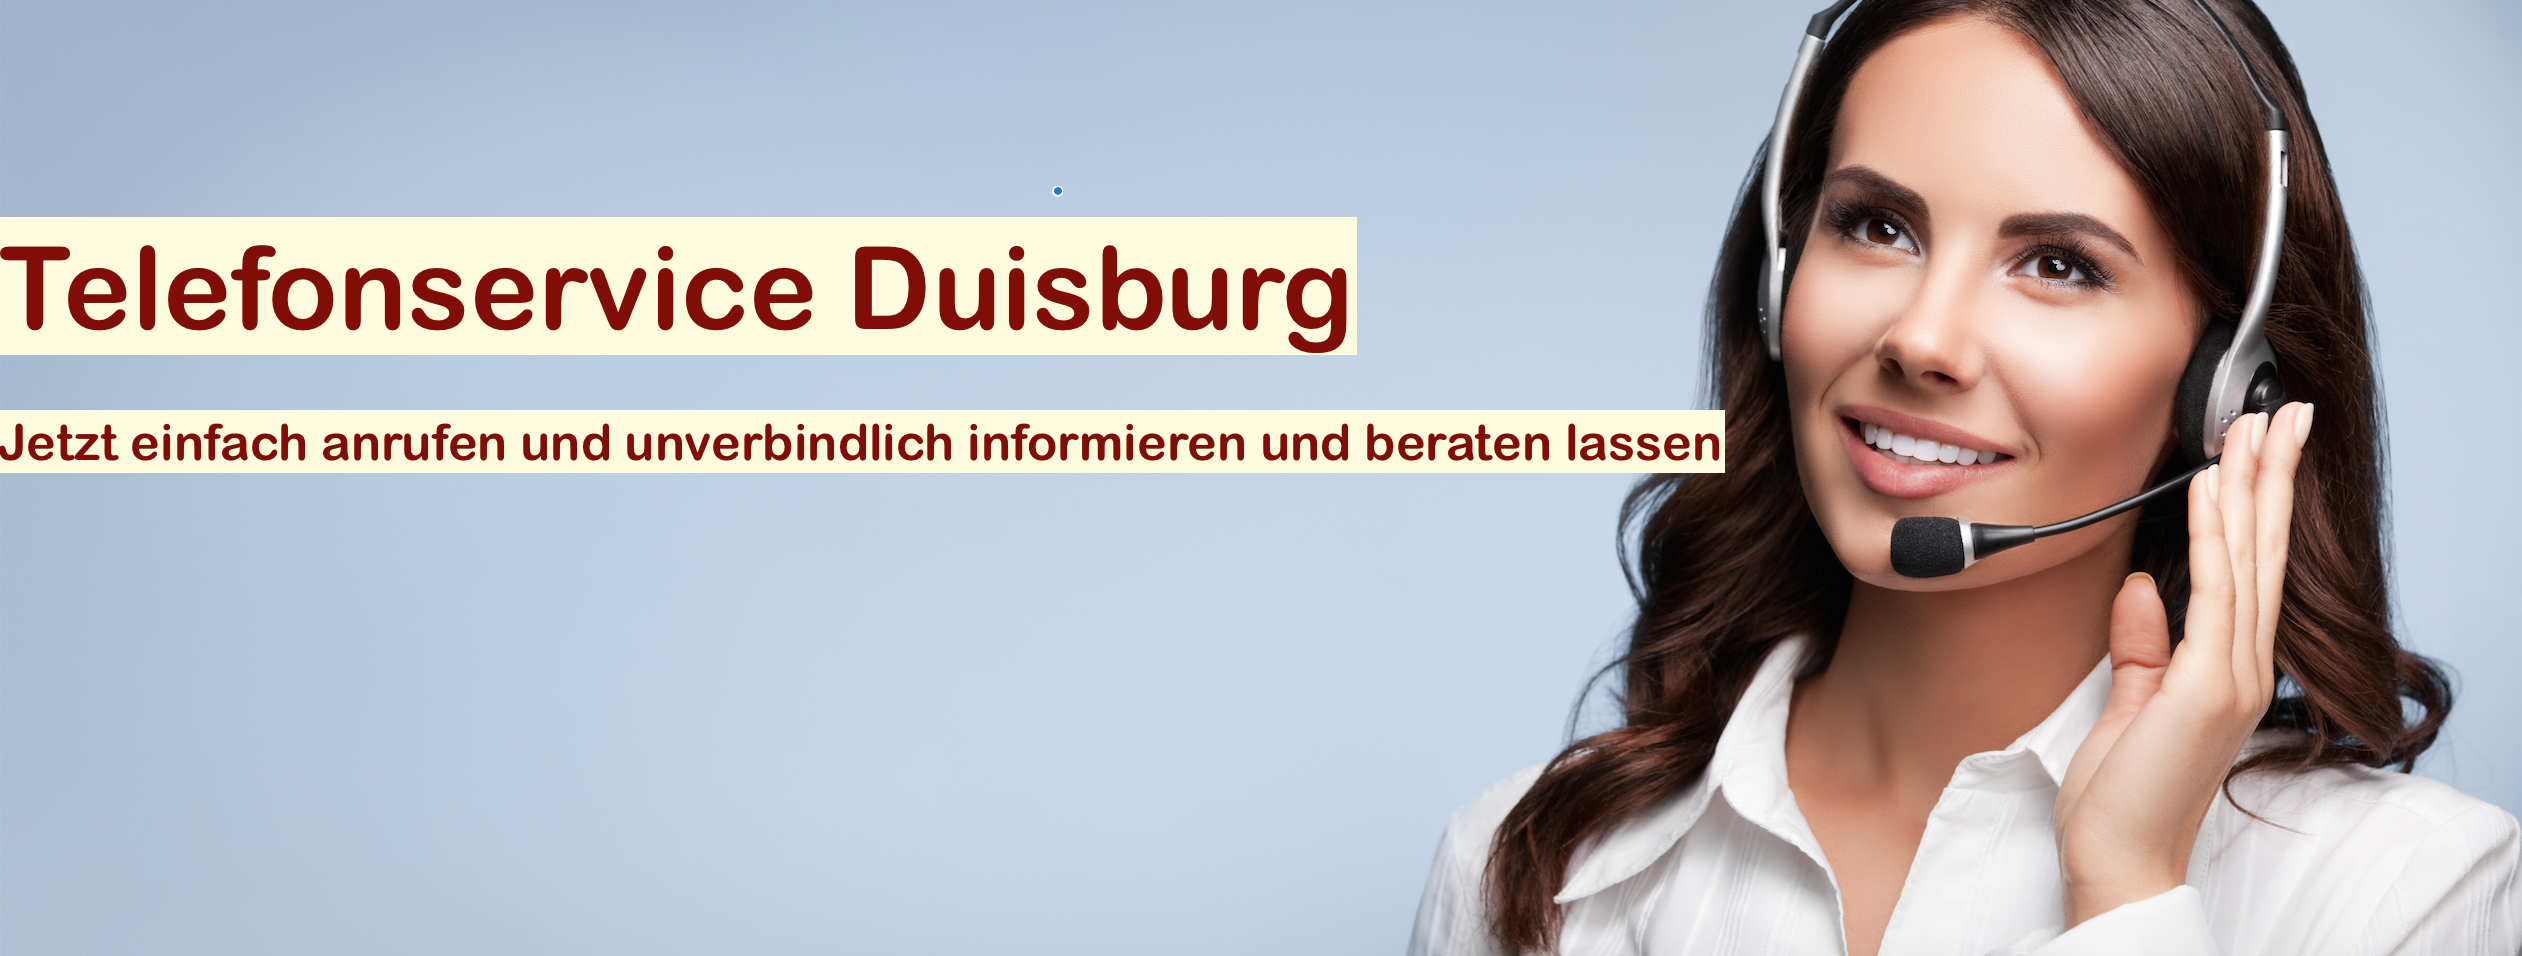 Telefonservice Duisburg